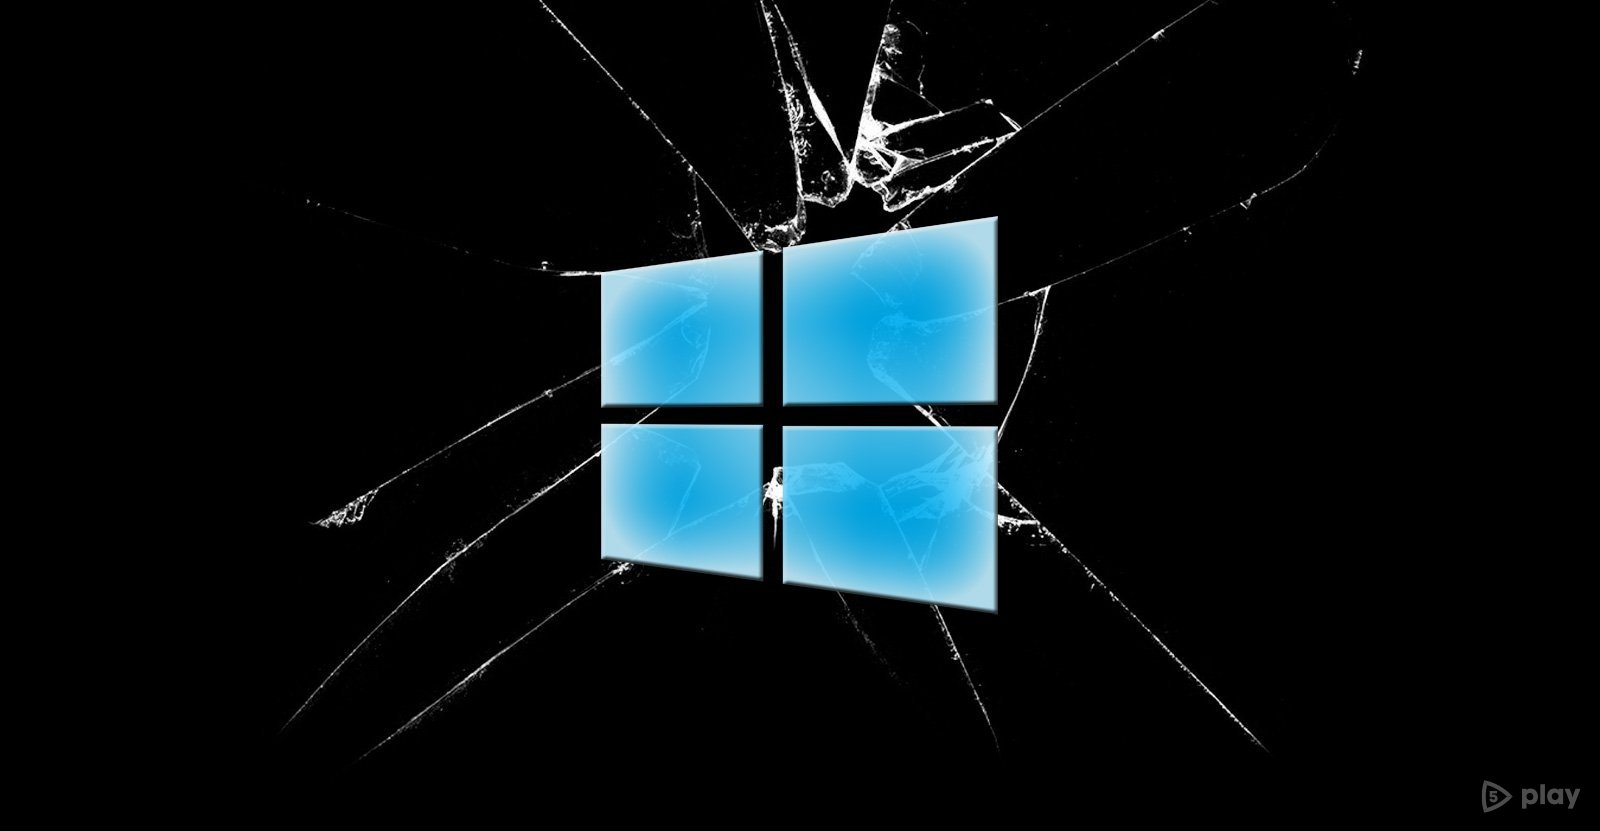 The latest Windows update has broken VPN services